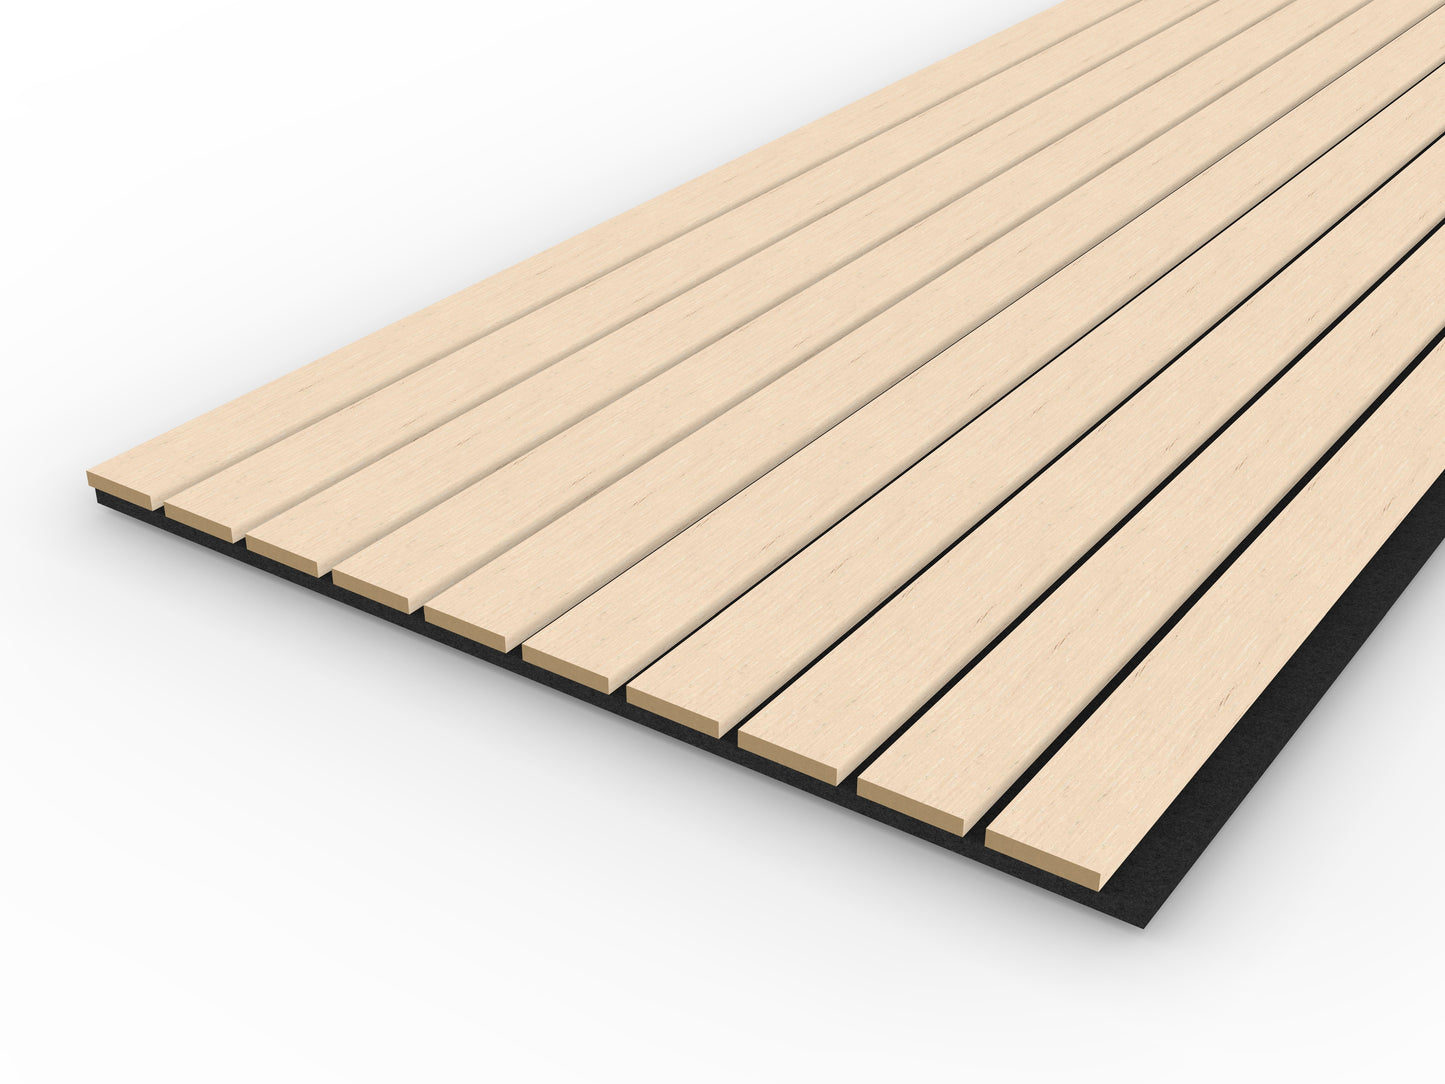 Washed Oak Acoustic Wood Wall Panel Wide Slat Series 2 - 240x60cm